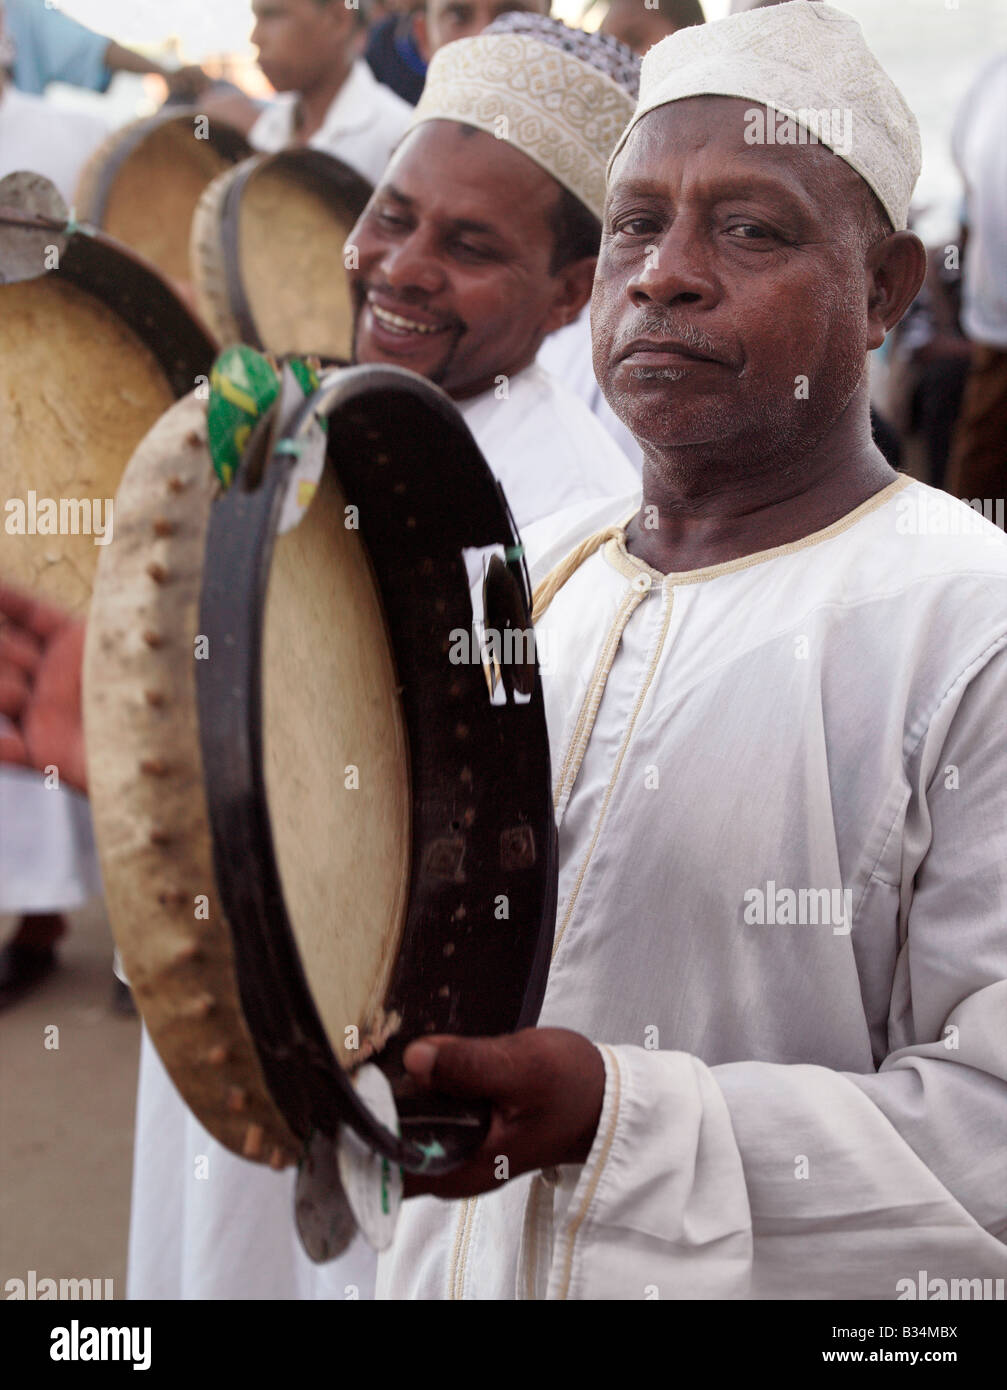 Kenya, Coast Province, Lamu Island. Muslim men maintain rhythm with tambourines during a performance of the Shabuwani along the Stock Photo